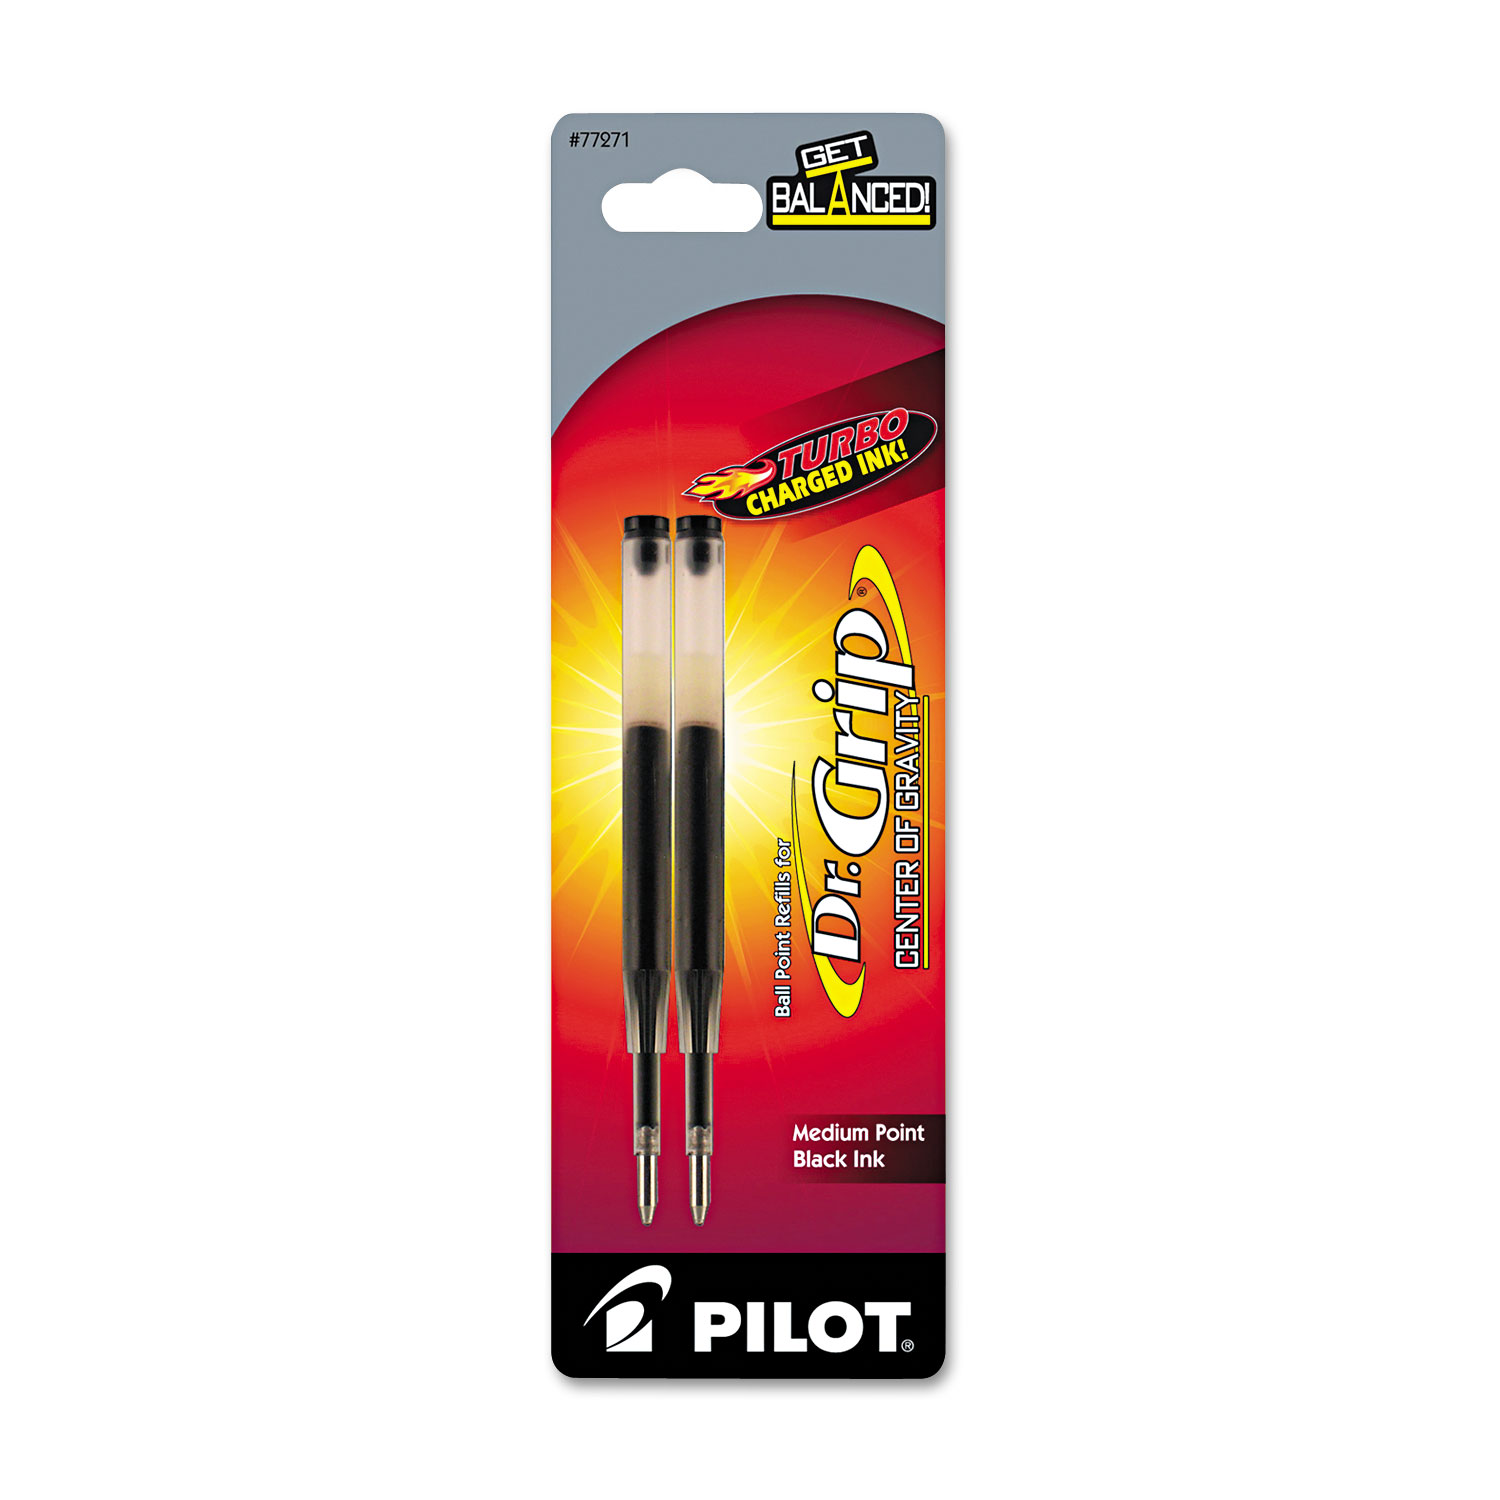  Pilot 77271 Refill for Pilot Dr. Grip Center of Gravity Pens, Medium Point, Black Ink, 2/Pack (PIL77271) 